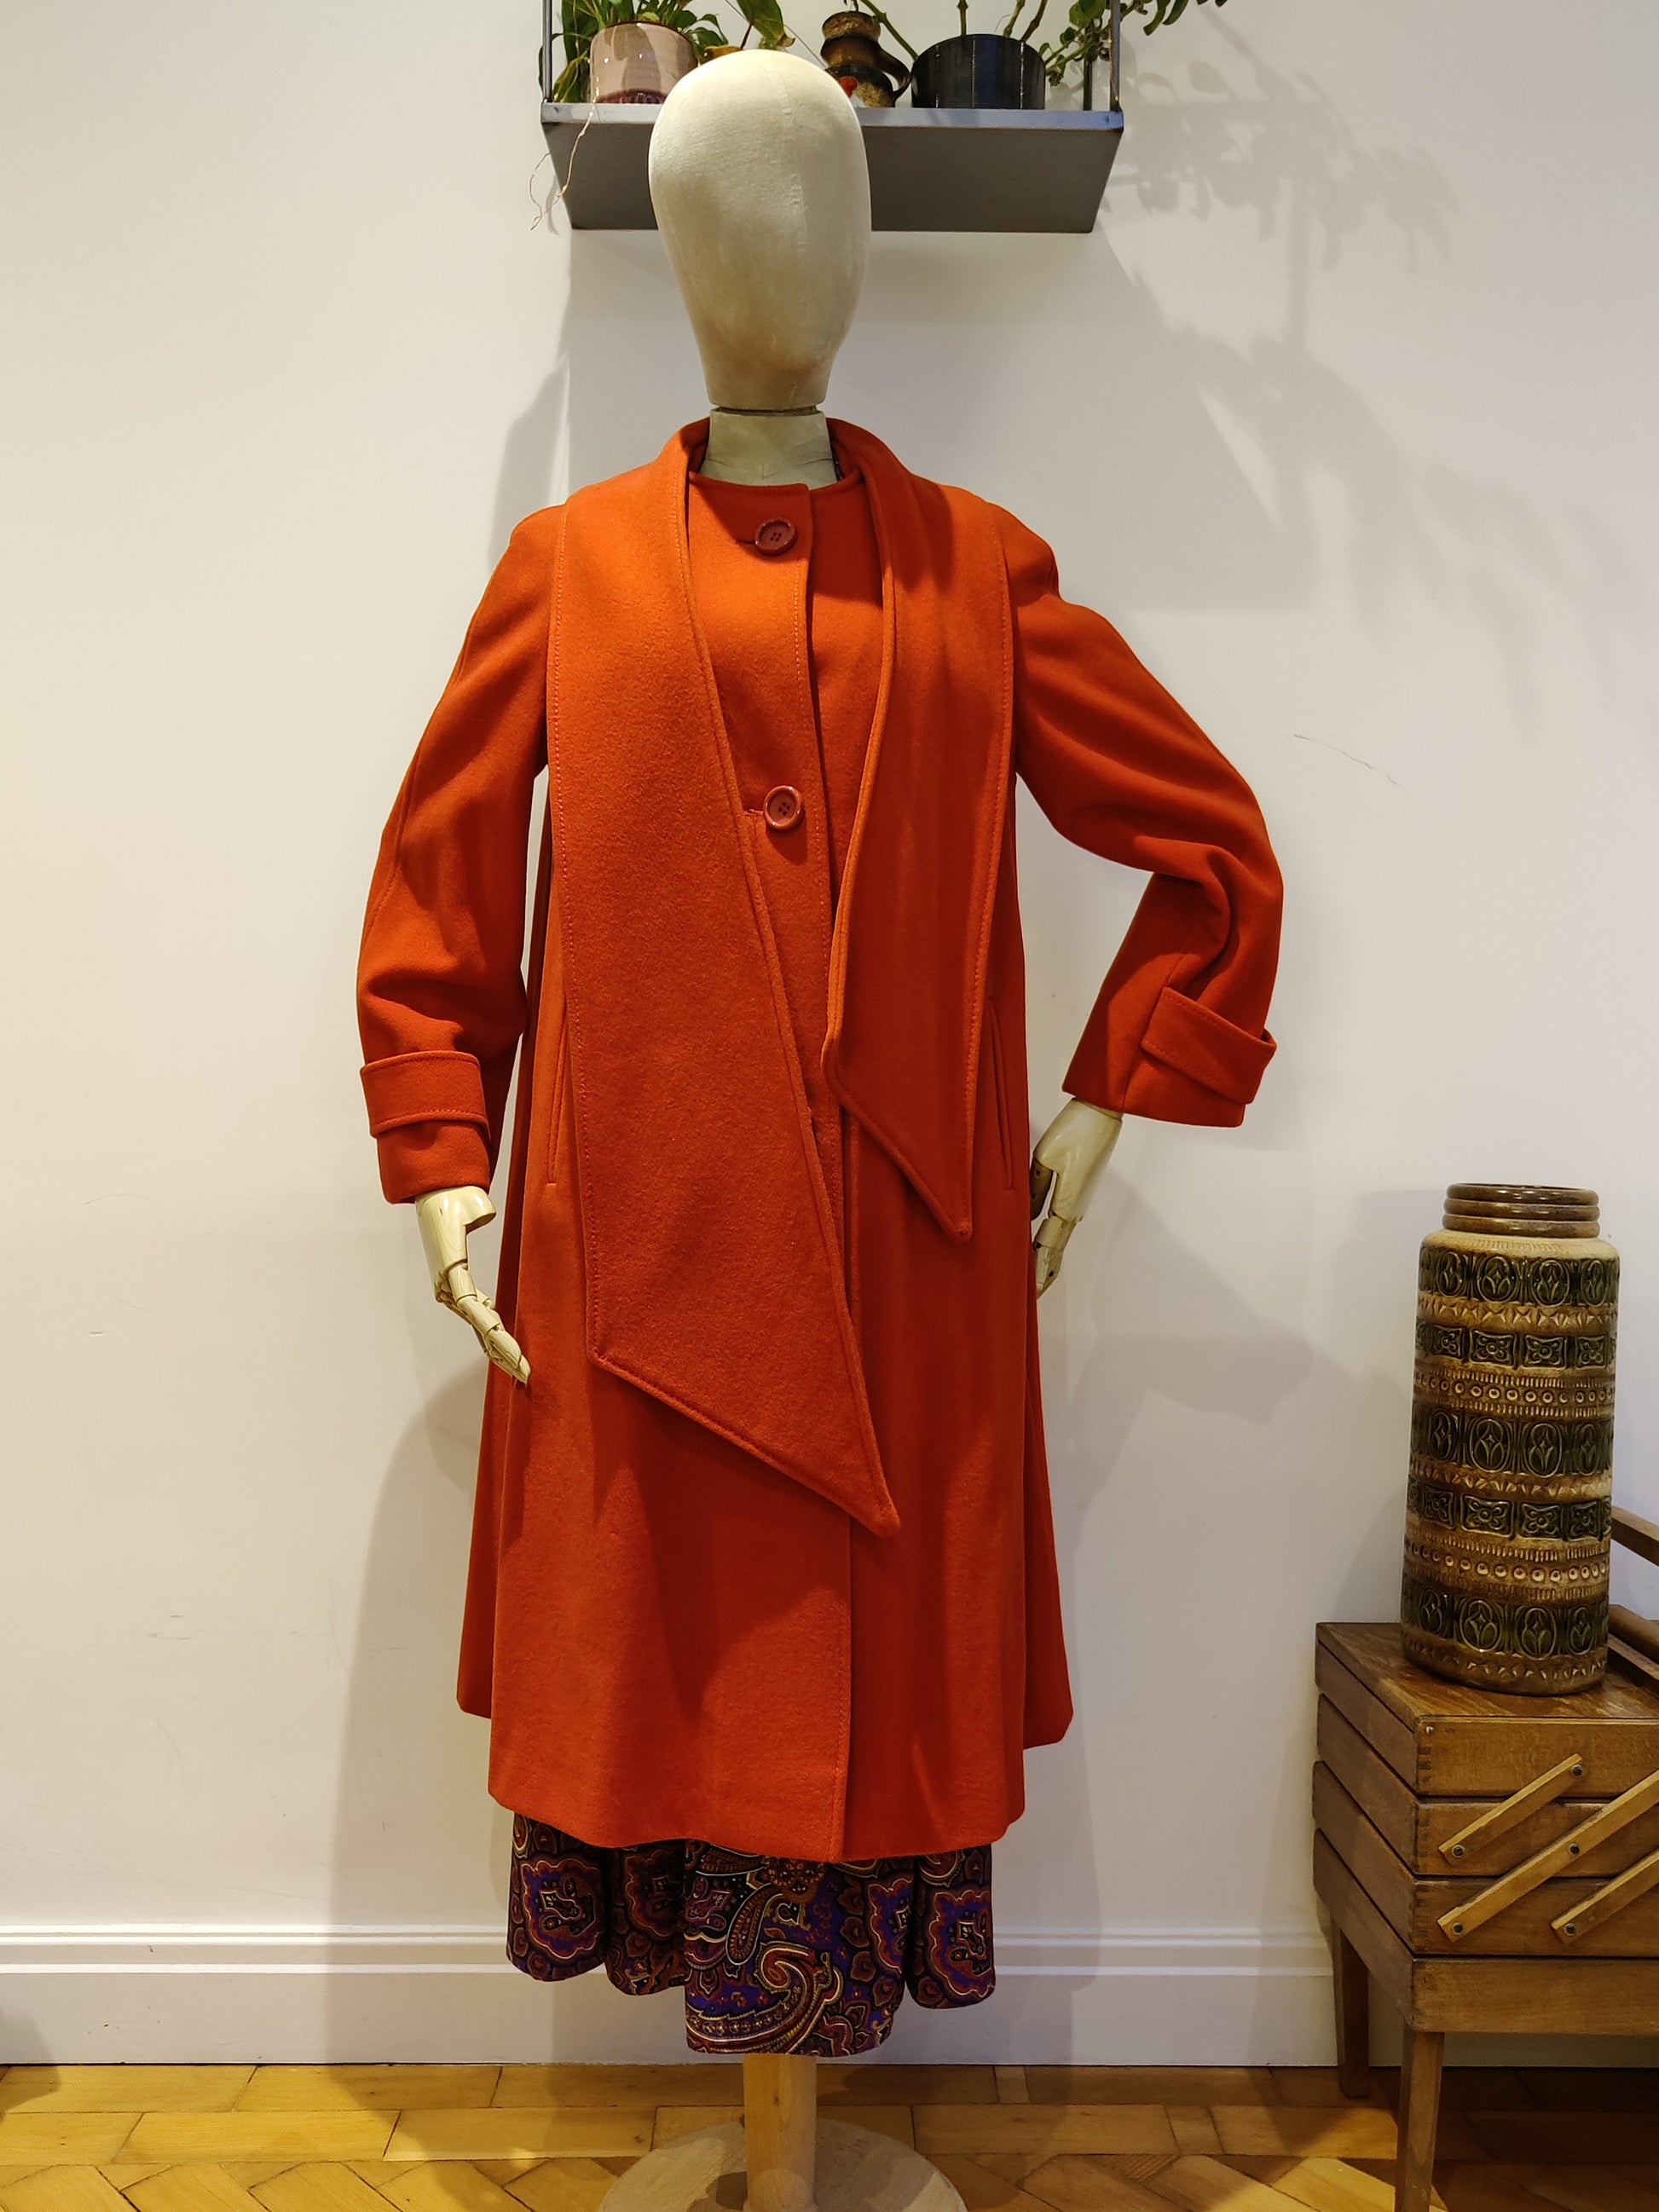 Red vintage swing coat with neck tie